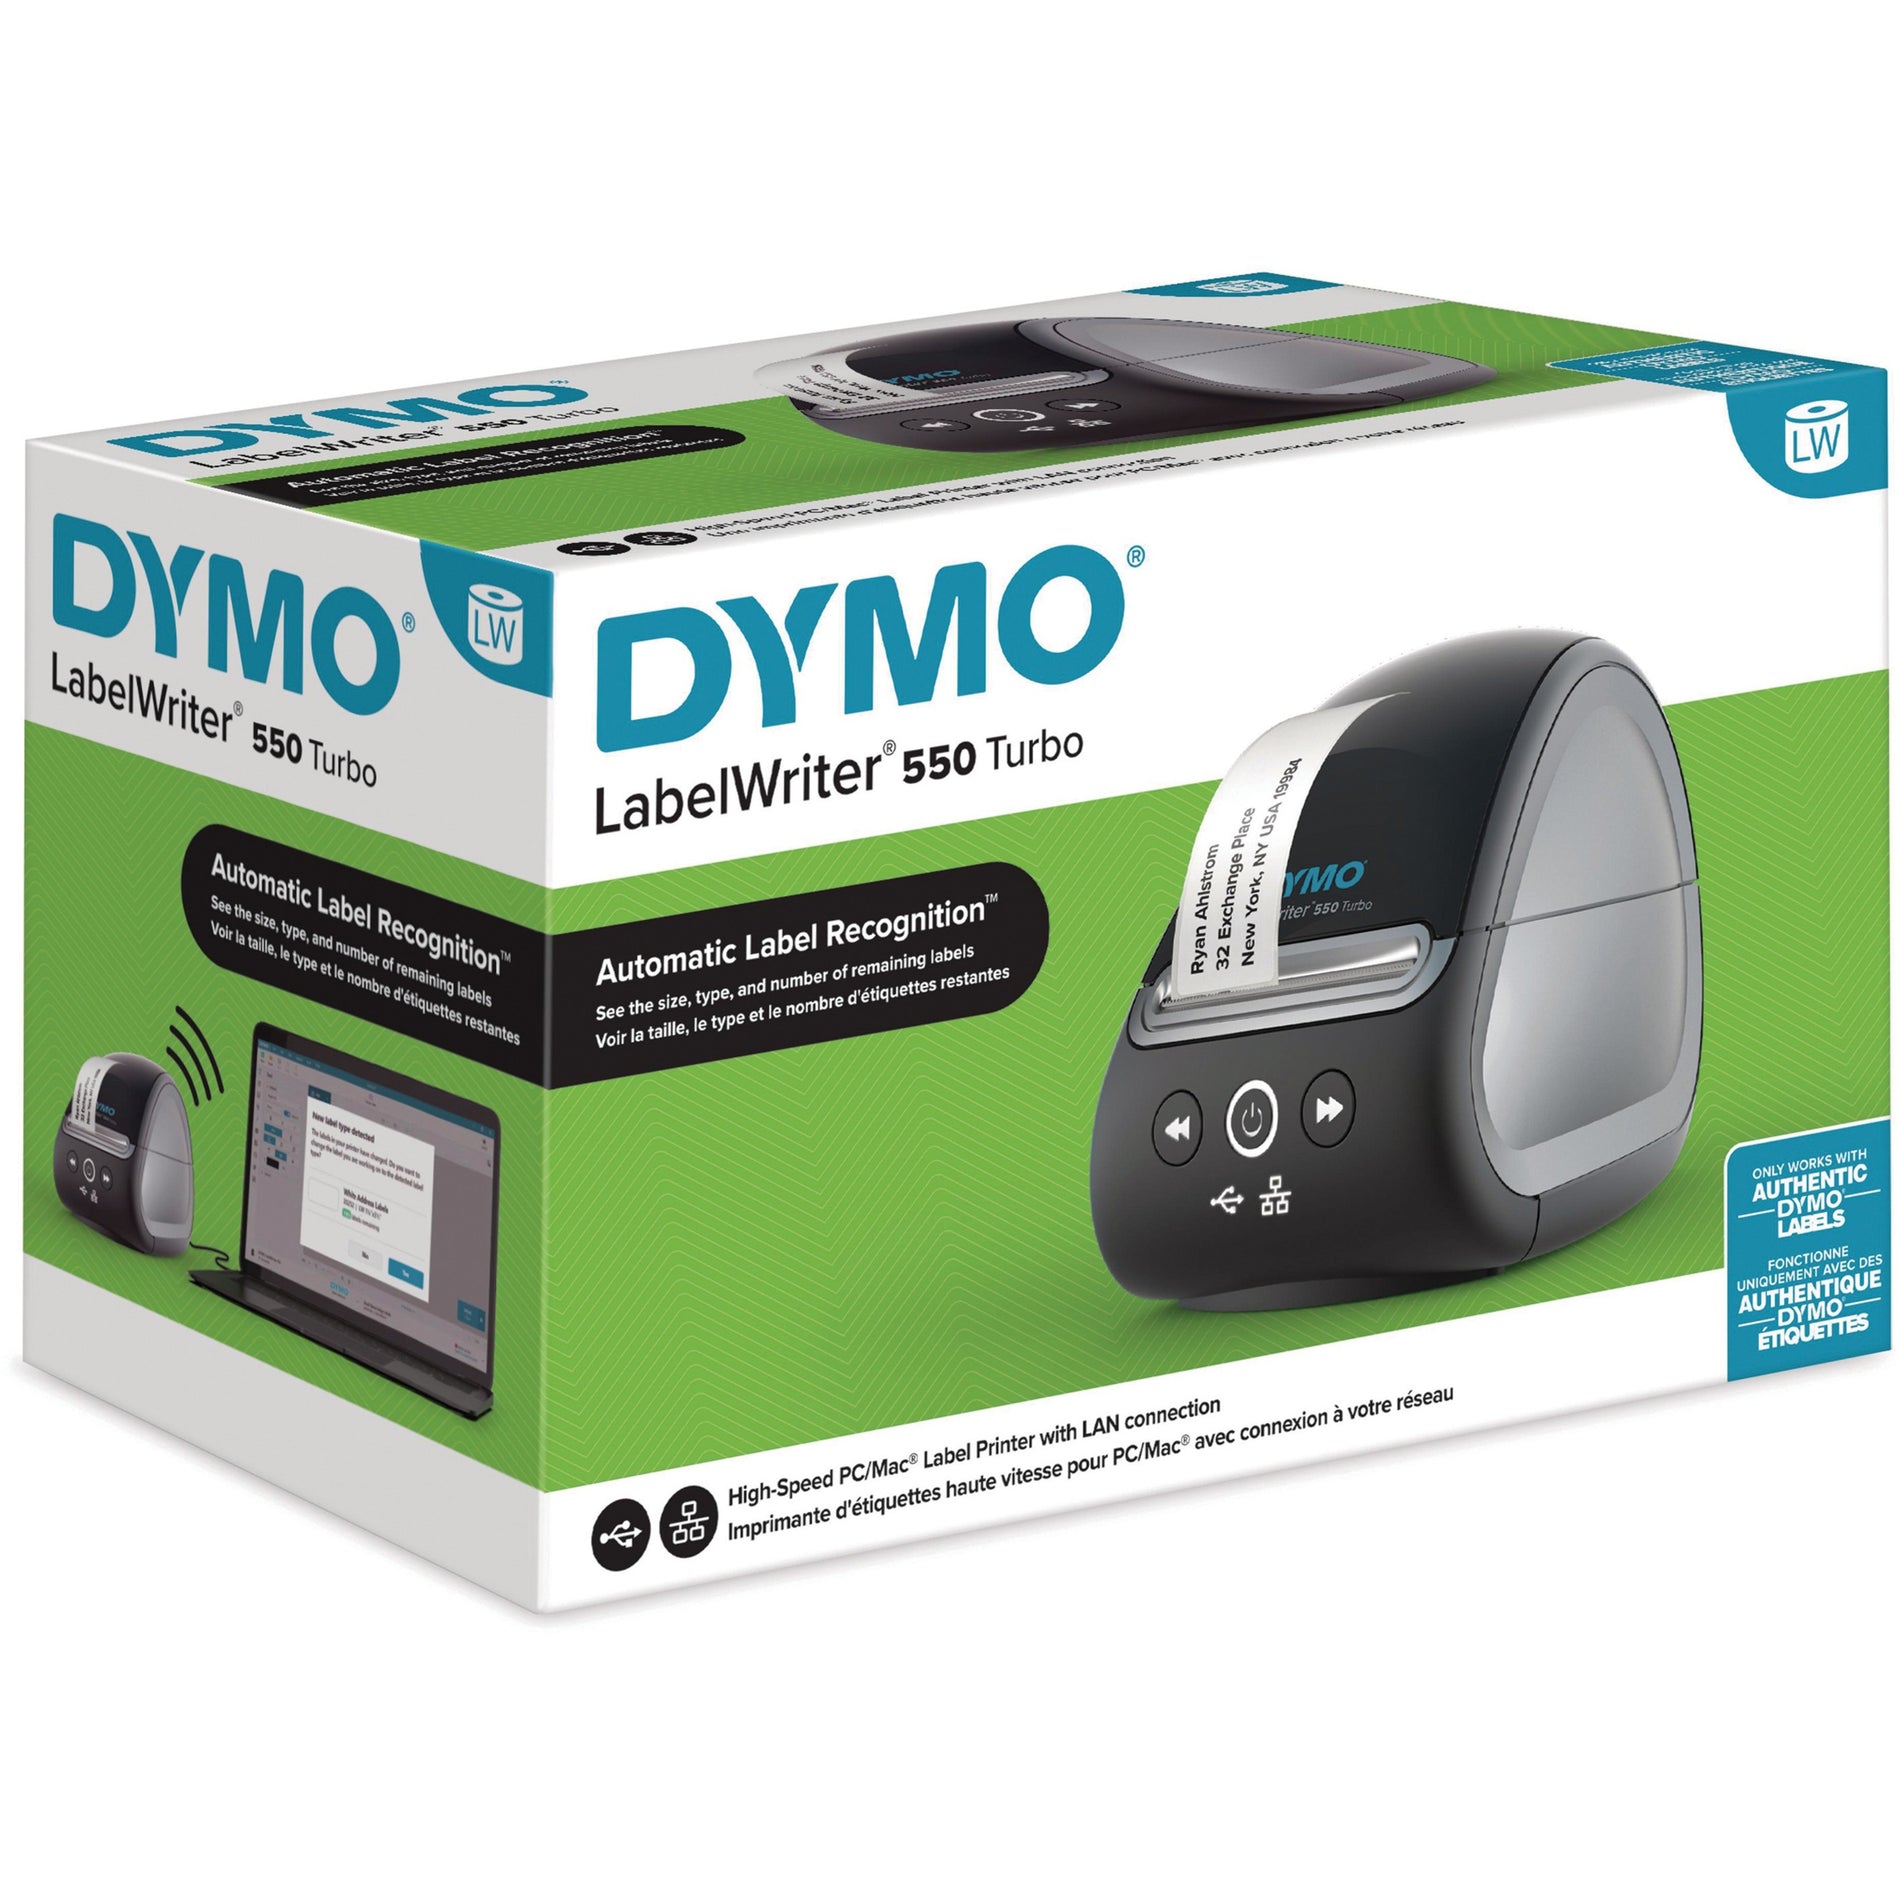 Dymo 2112553 LabelWriter 550 Turbo Label Printer, Direct Thermal Printer, 2 Year Warranty, Mac/PC Compatible